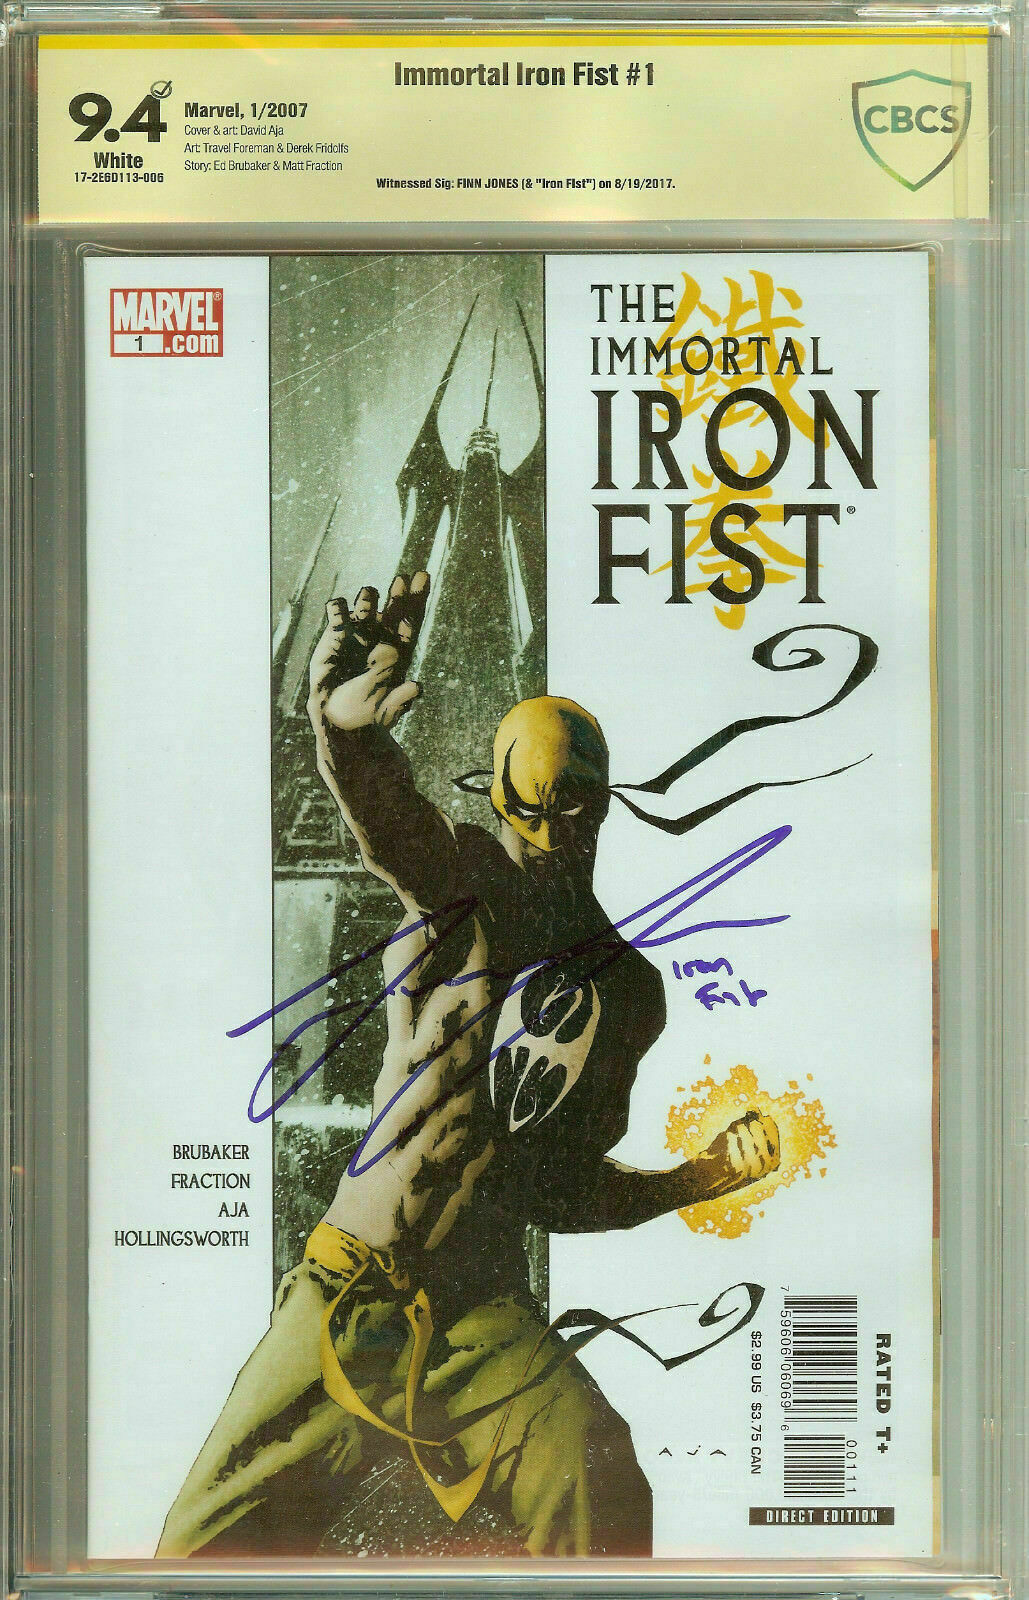 Immortal Iron Fist #1 Variant CBCS 9.4 Signed Finn Jones (Game of Thrones) CGC